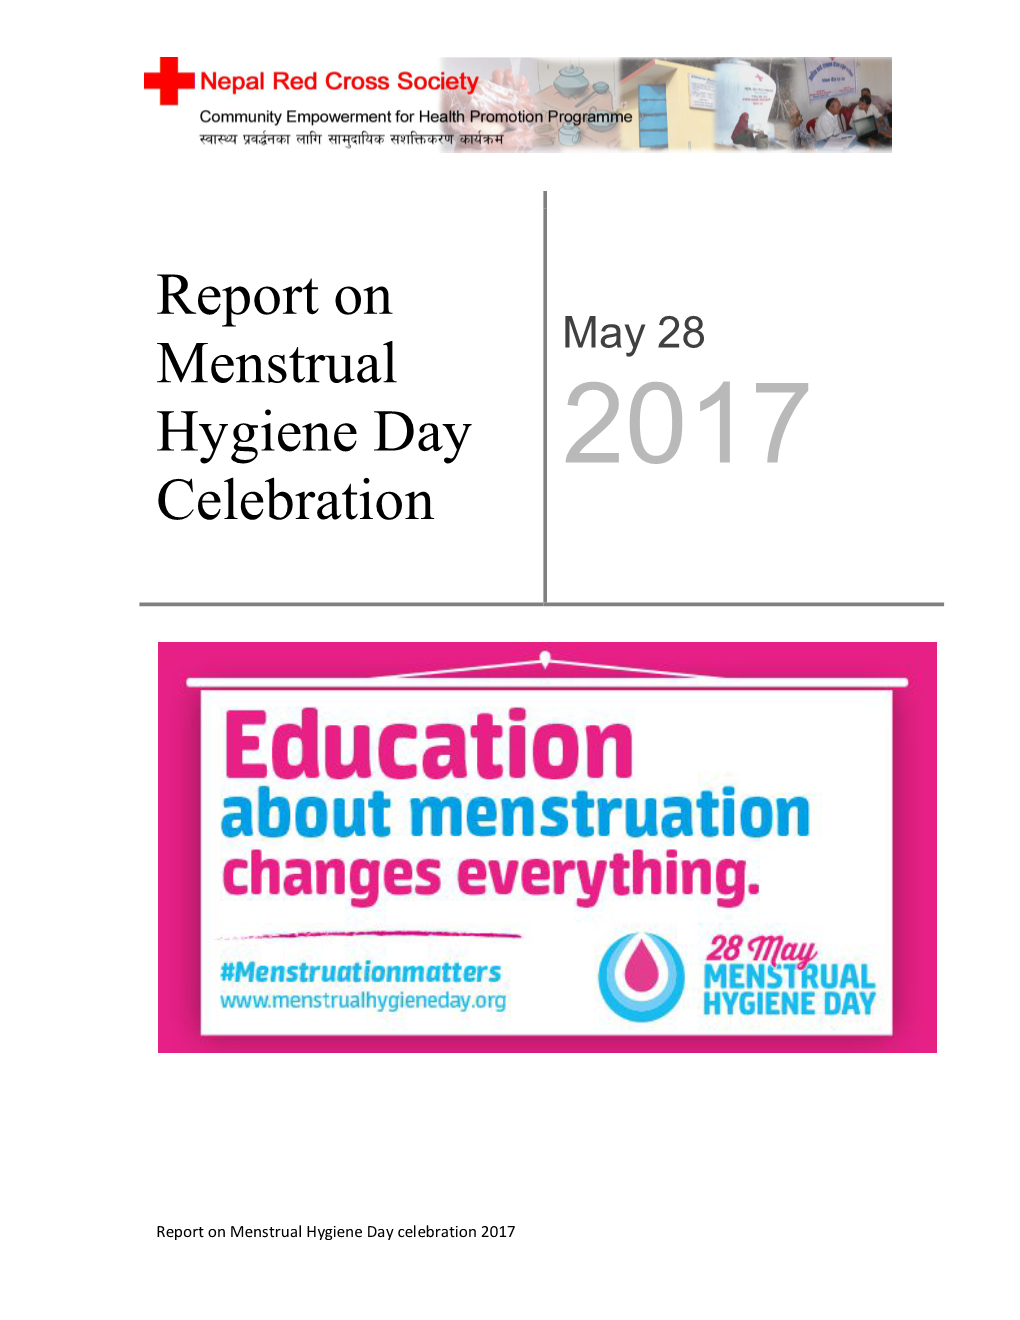 Report on Menstrual Hygiene Day Celebration